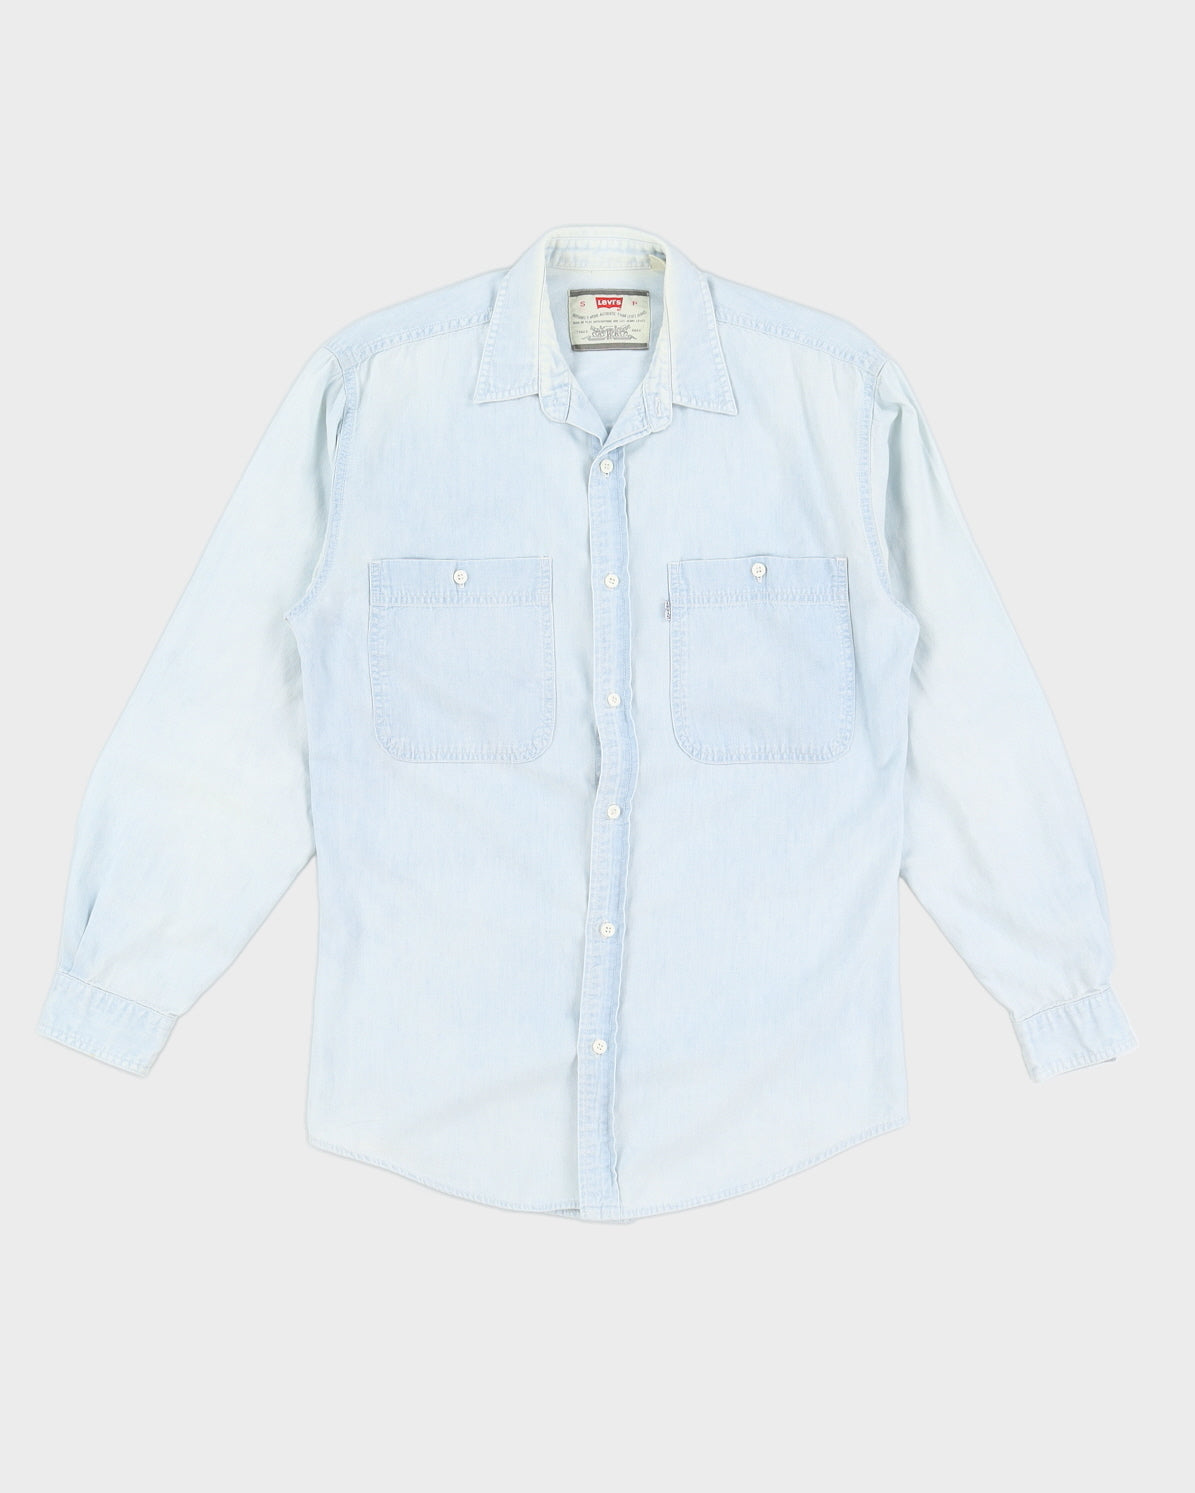 Vintage 90s Levi's Blue Denim Long Sleeved Shirt - S